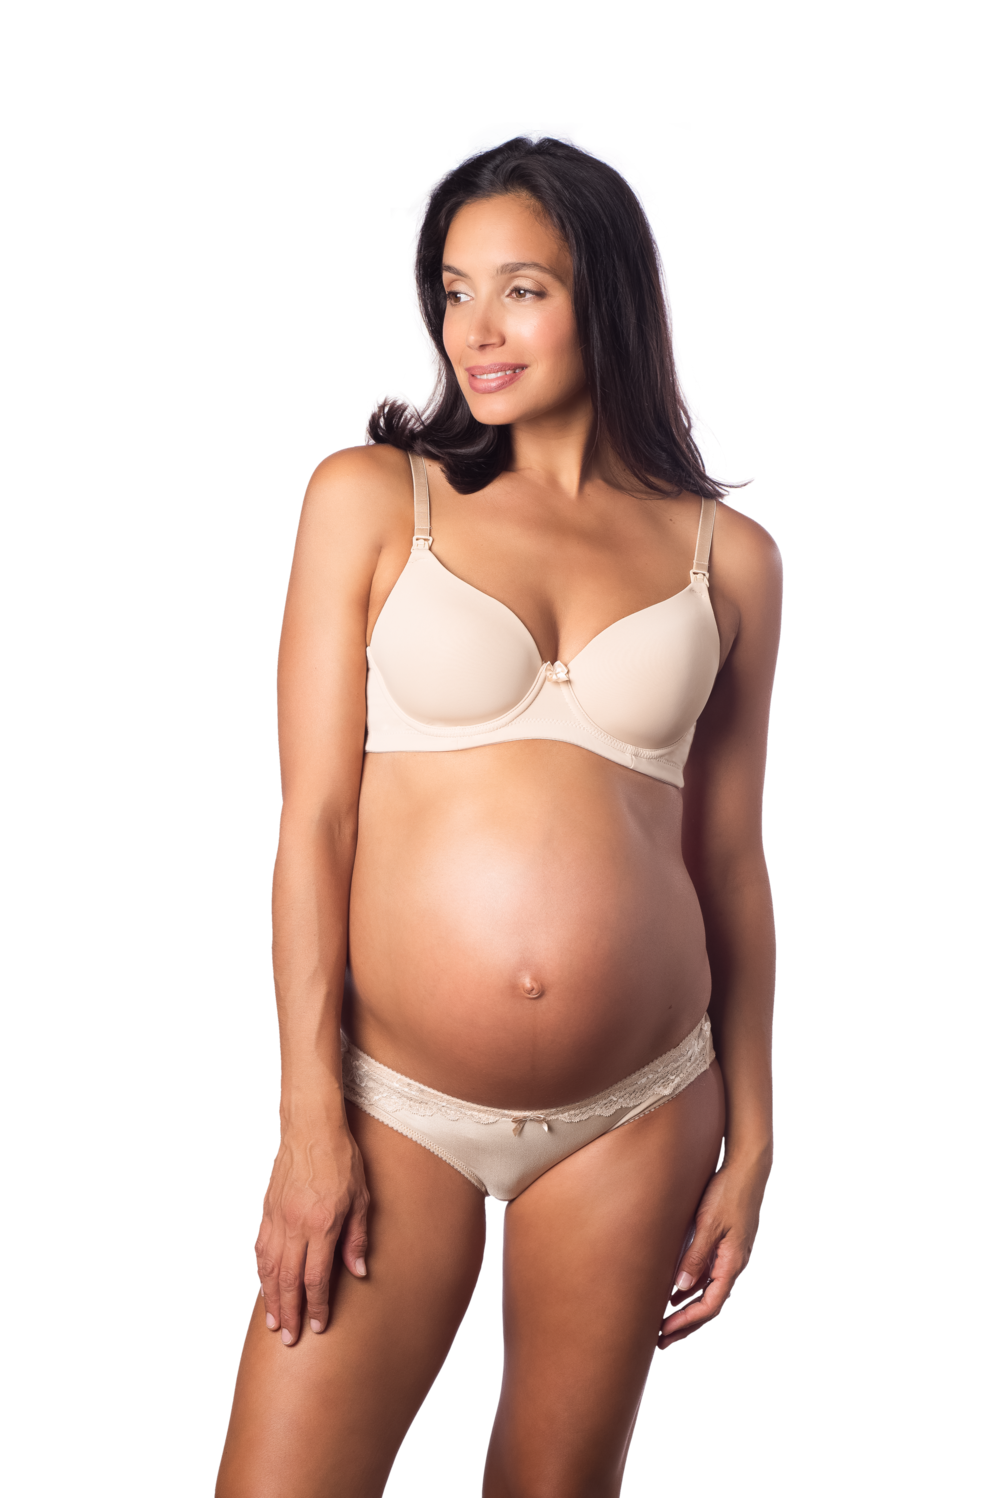 Flexiwire Bras - Little Miracles Maternity Wear